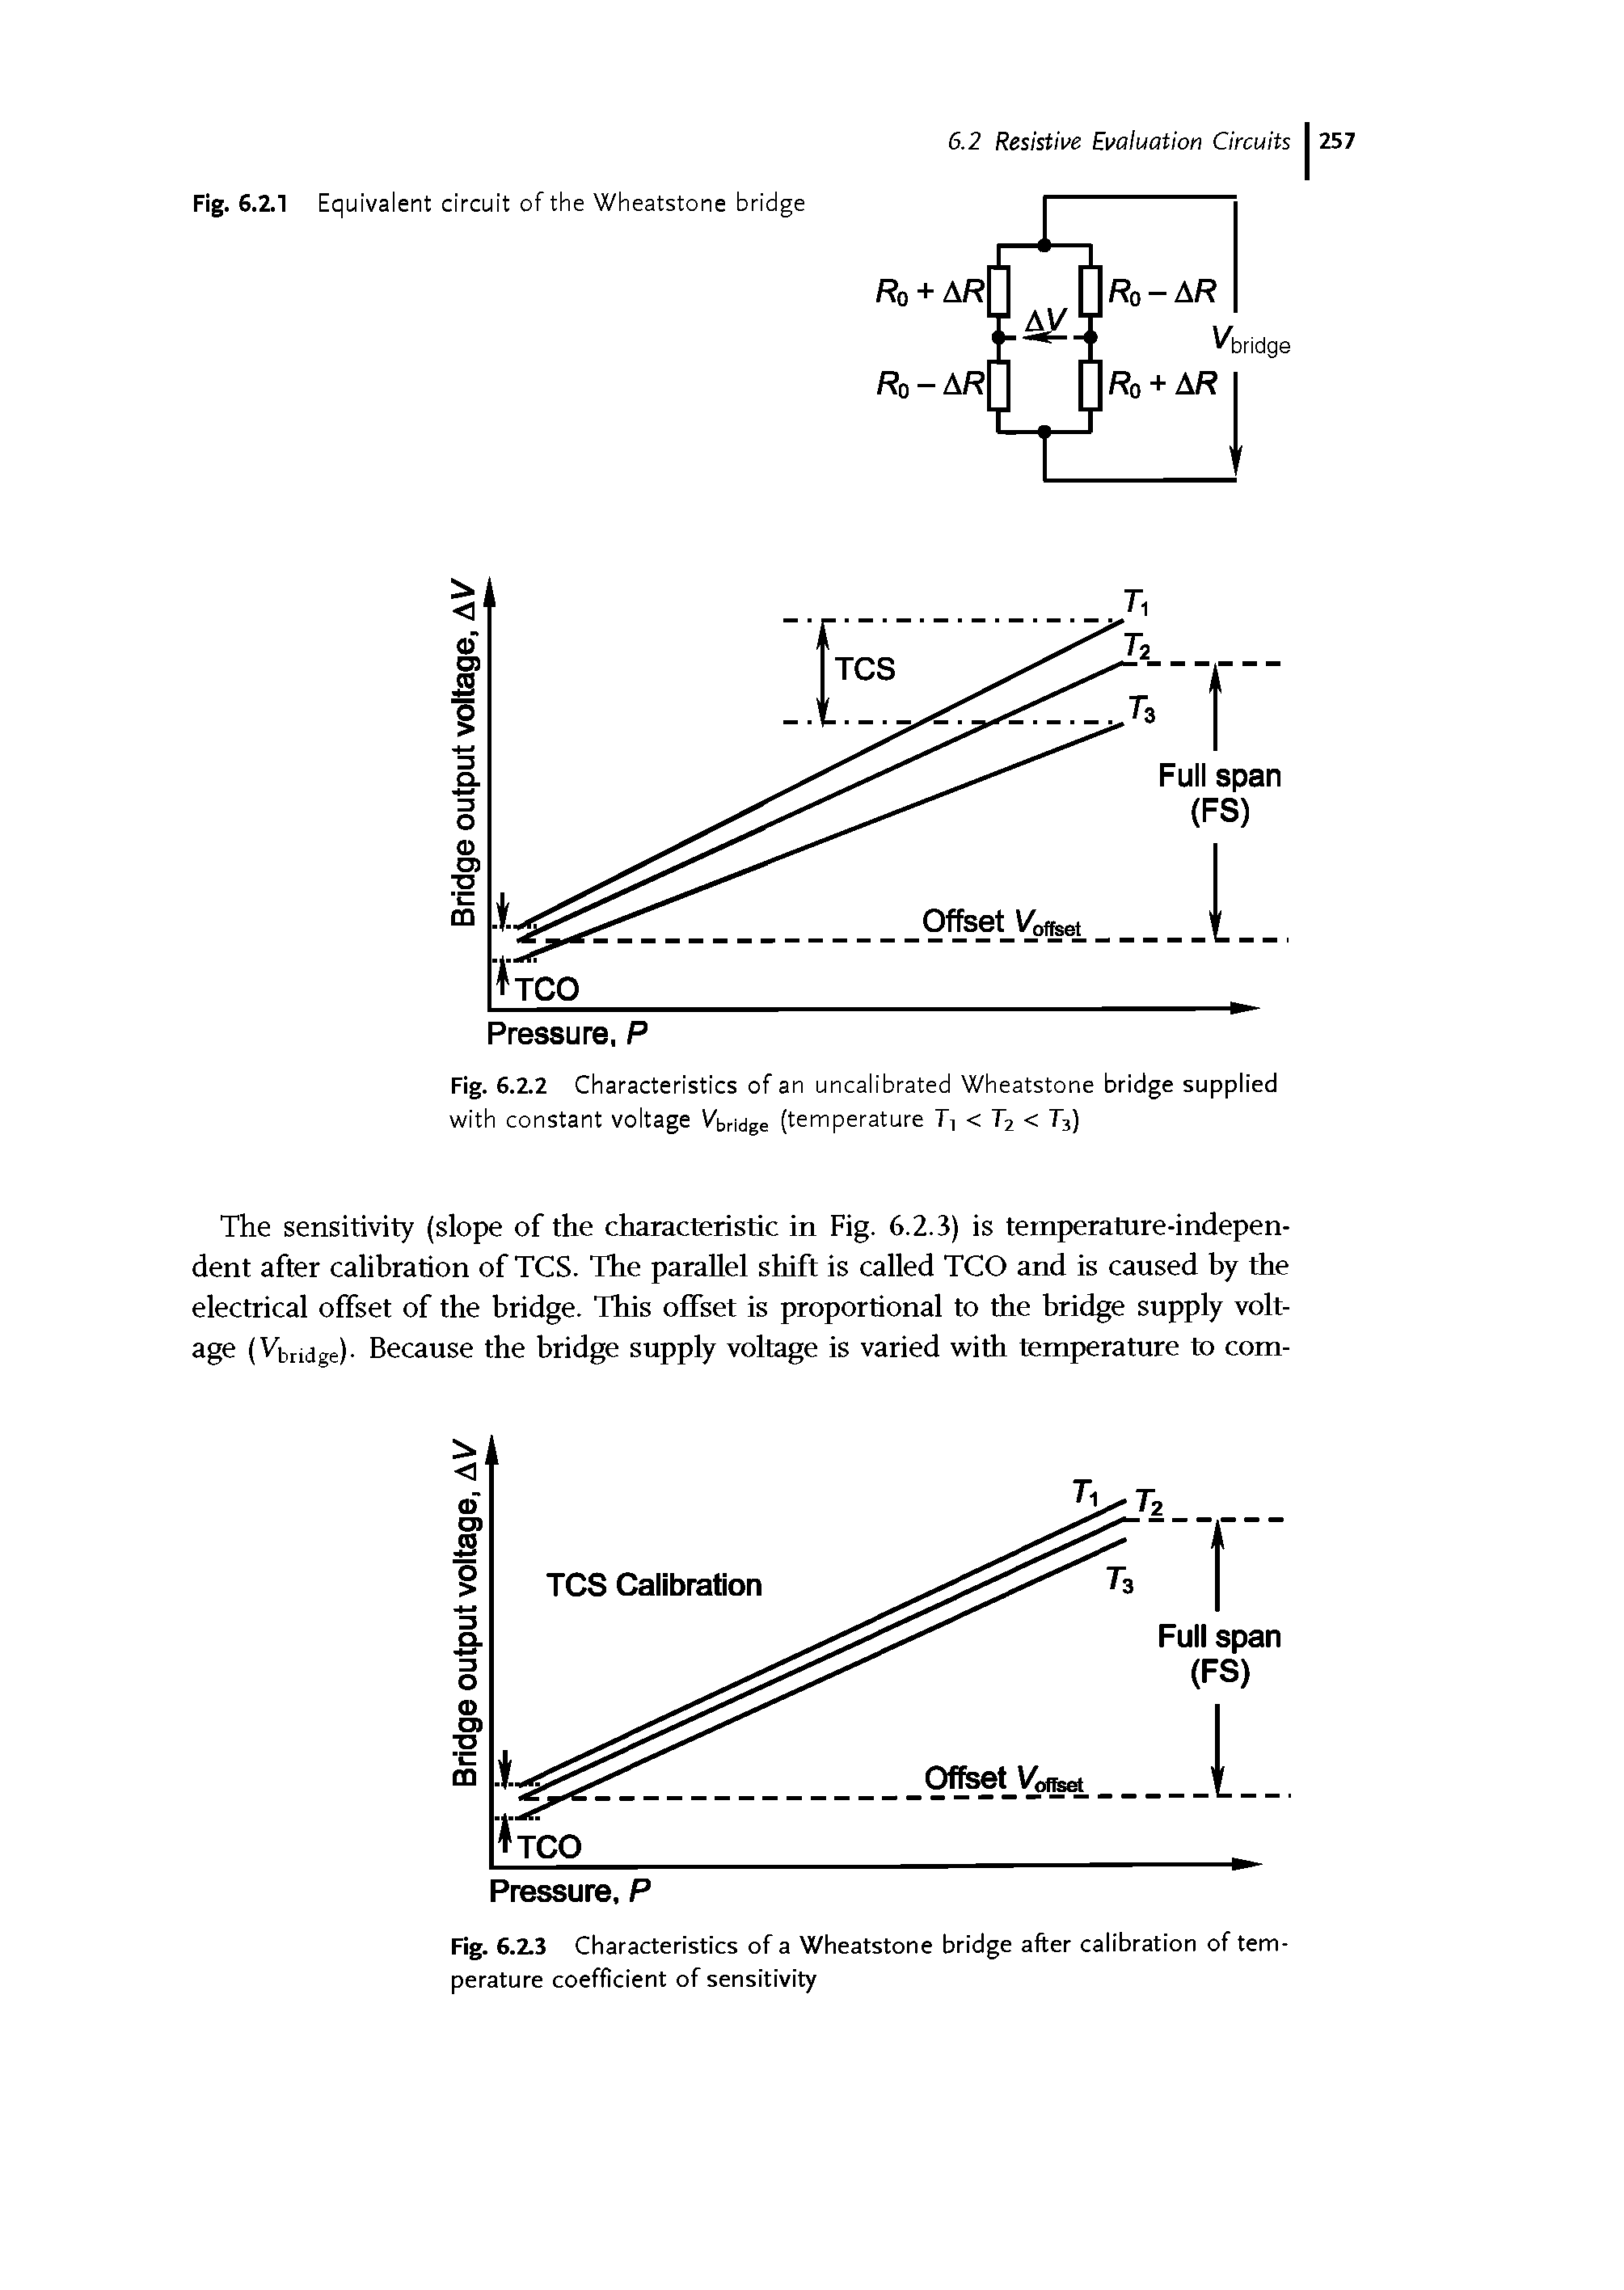 Fig. 6.2.3 Characteristics of a Wheatstone bridge after calibration of temperature coefficient of sensitivity...